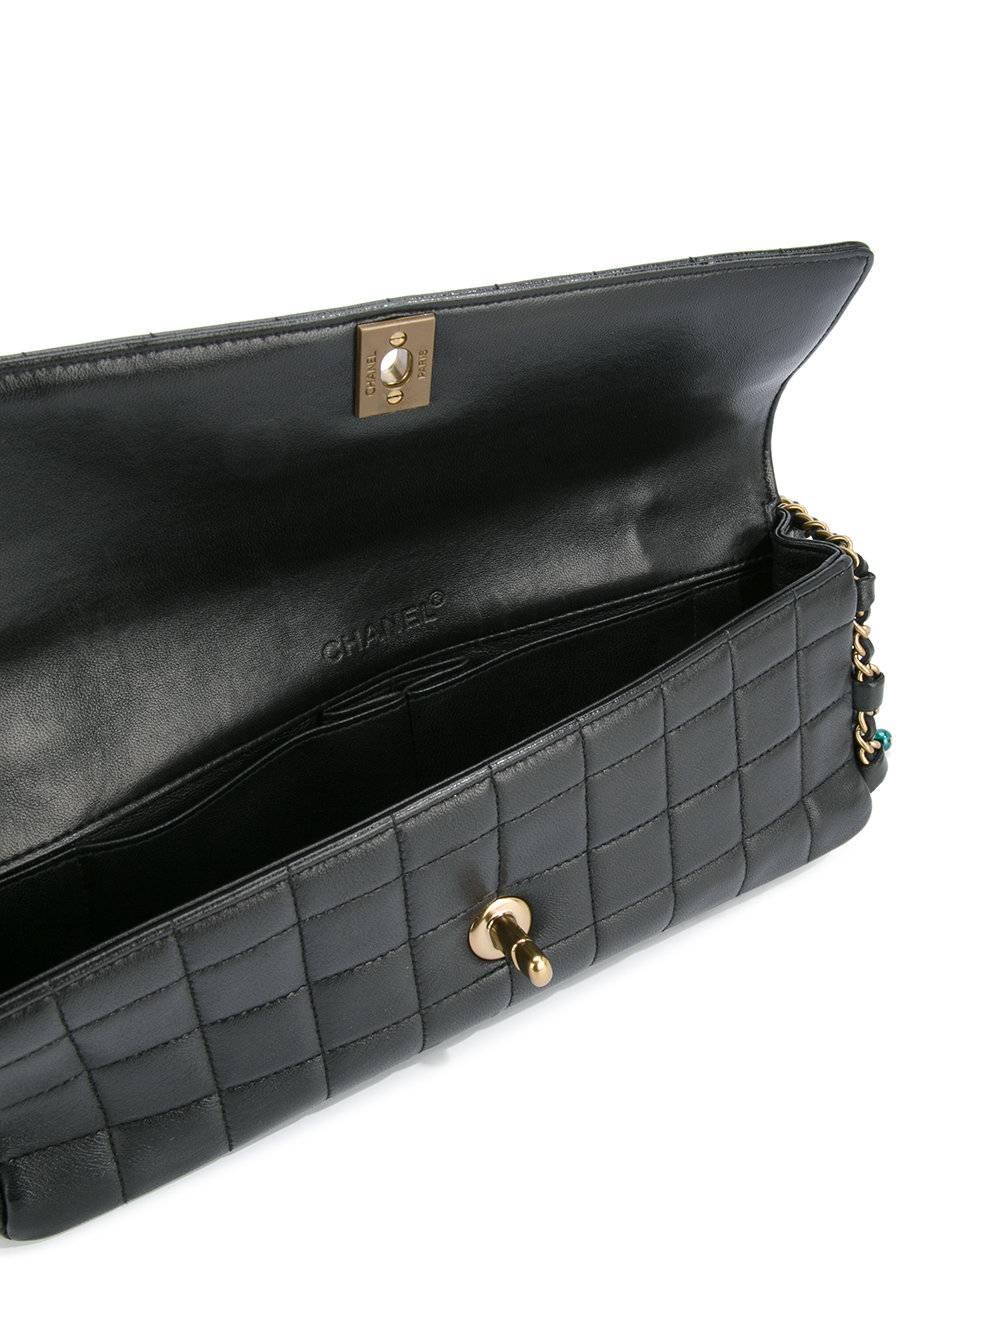 Chanel Black Leather Multi Color Gripoix Evening Clutch Shoulder Flap Bag 3